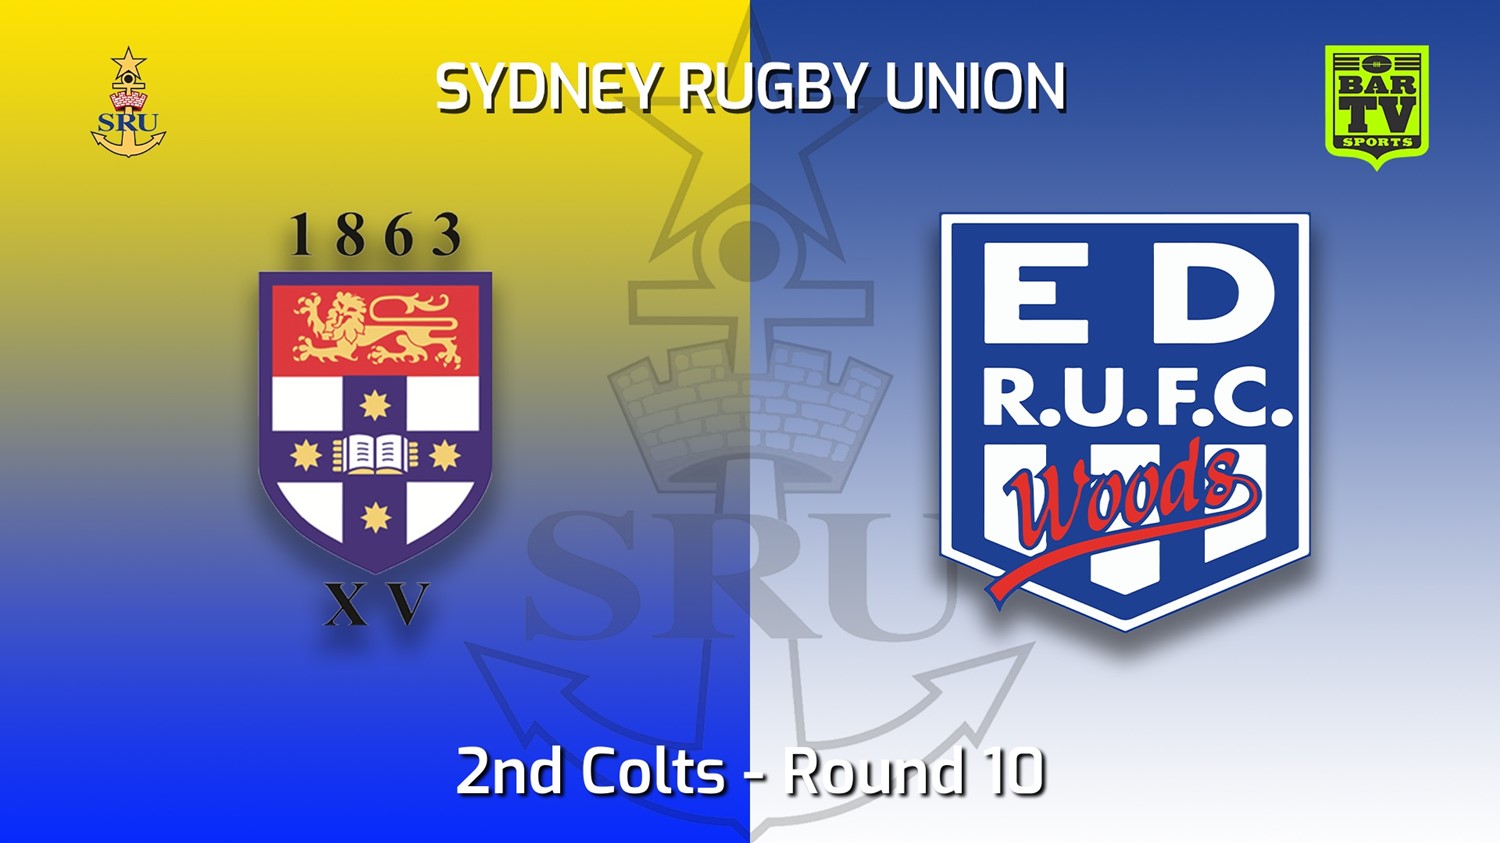 220604-Sydney Rugby Union Round 10 - 2nd Colts - Sydney University v Eastwood Slate Image